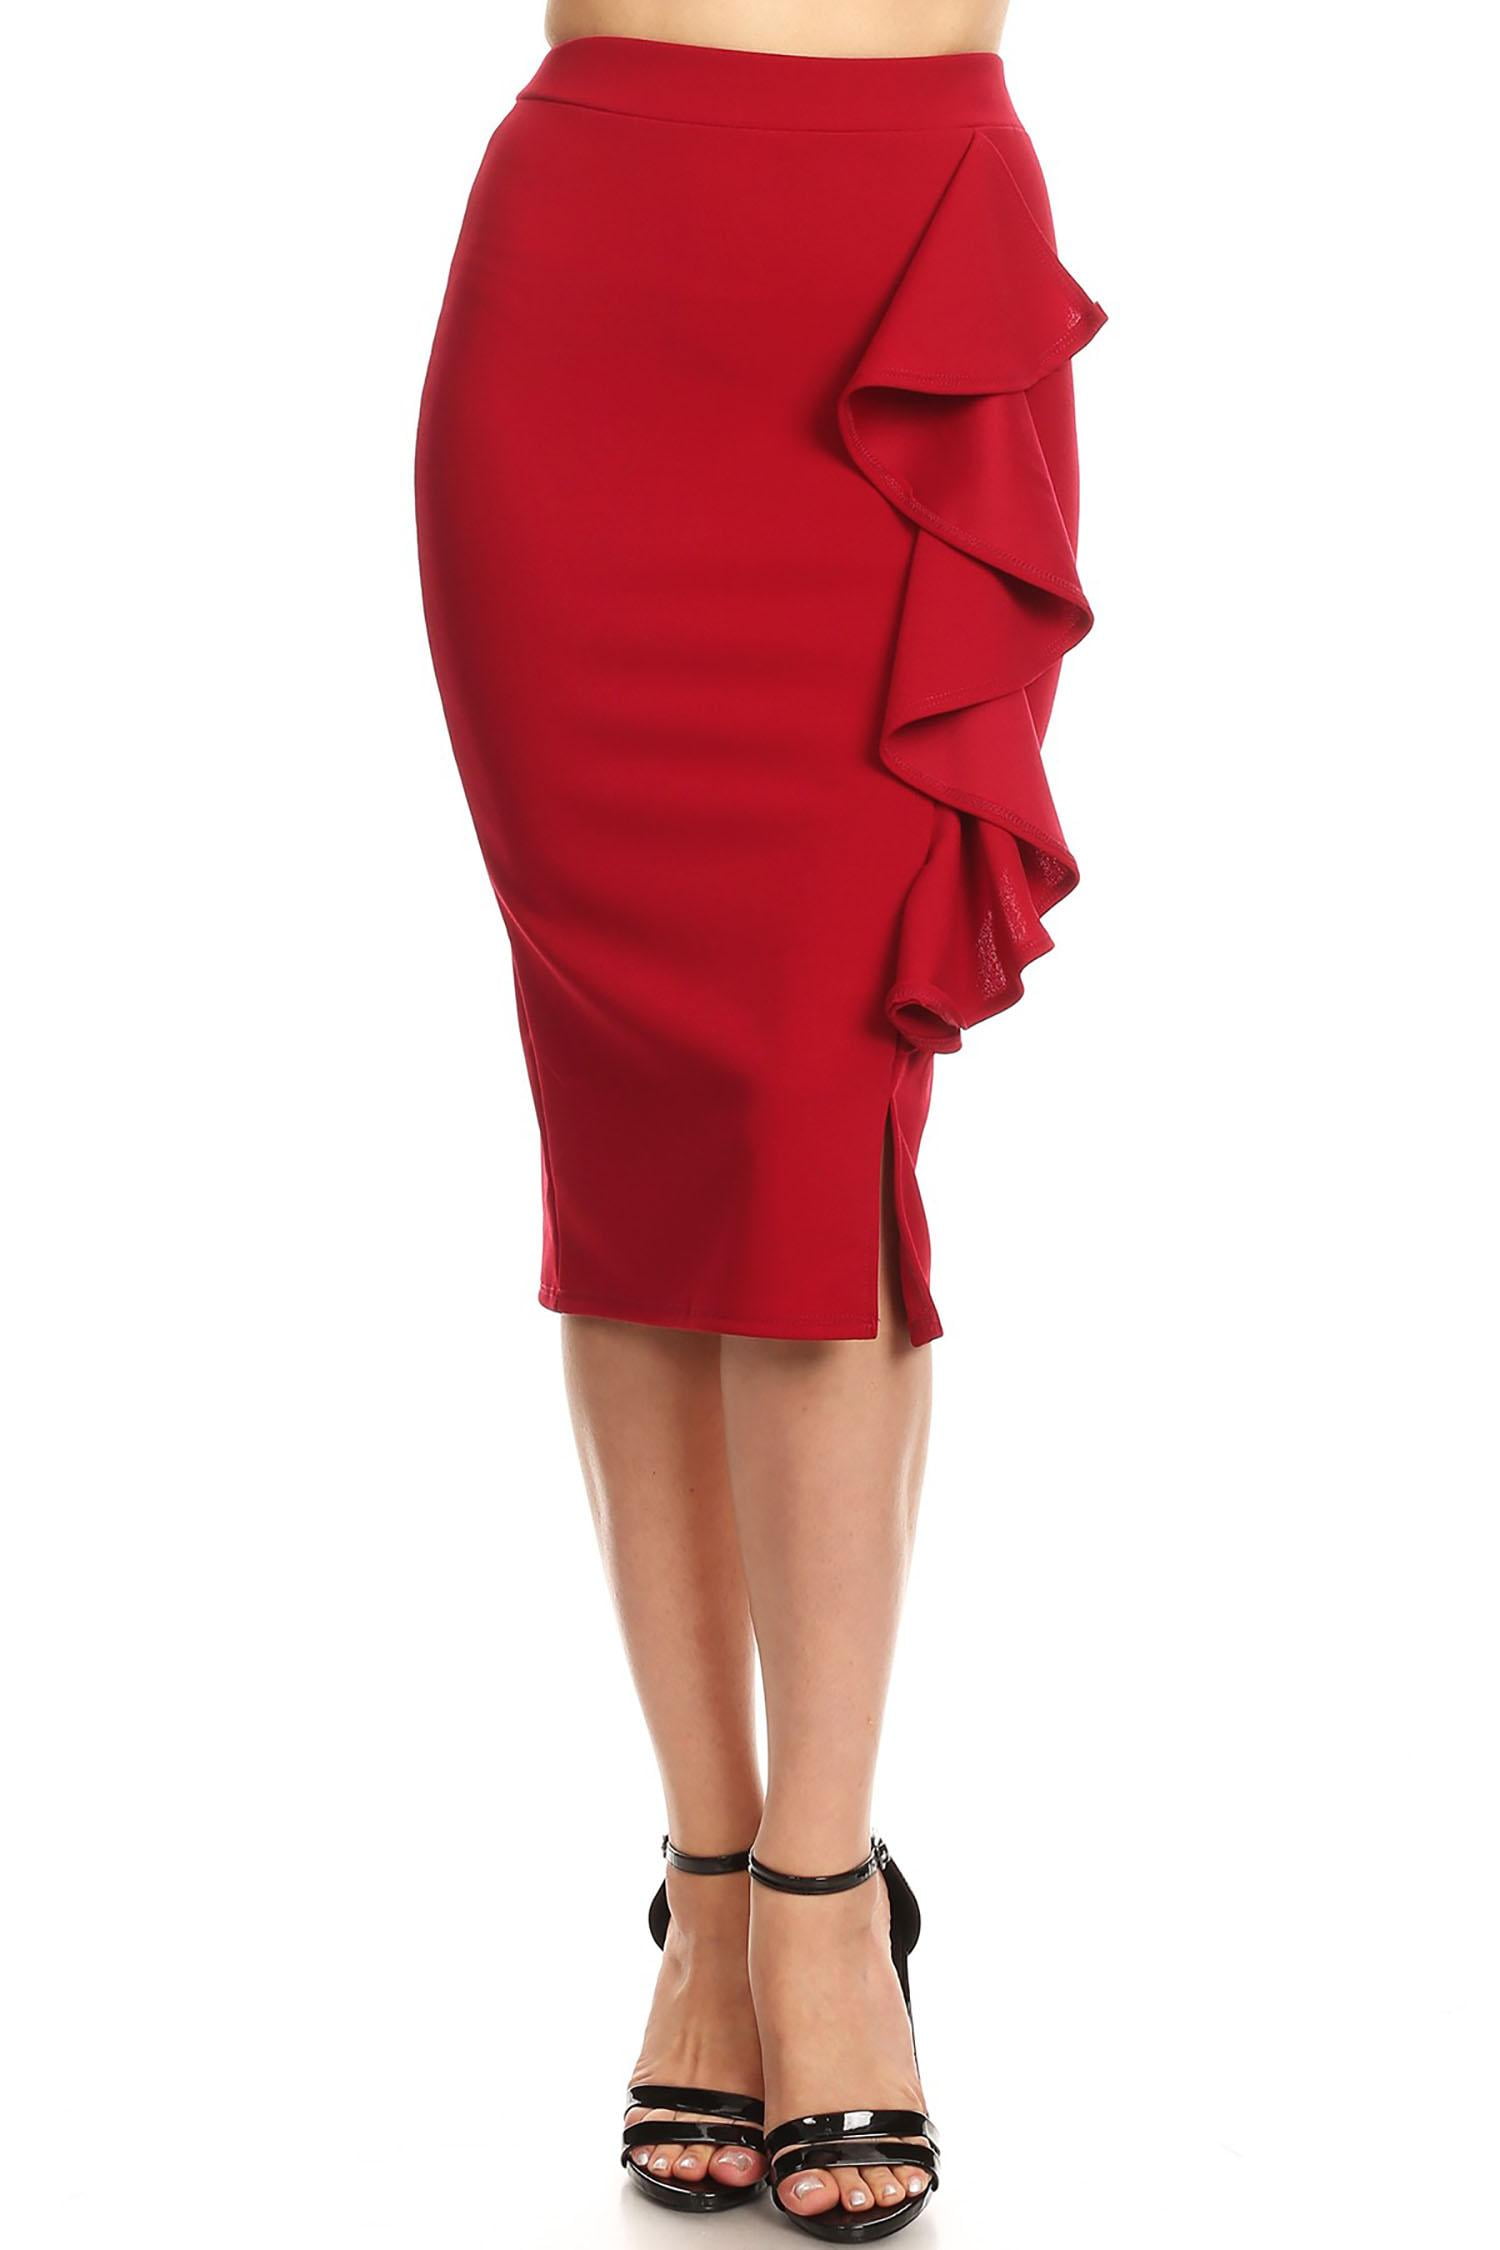 Women's Solid Casual High Waist Band Ruffle Bodycon Knee Midi Pencil Skirt/Made  in USA - Walmart.com